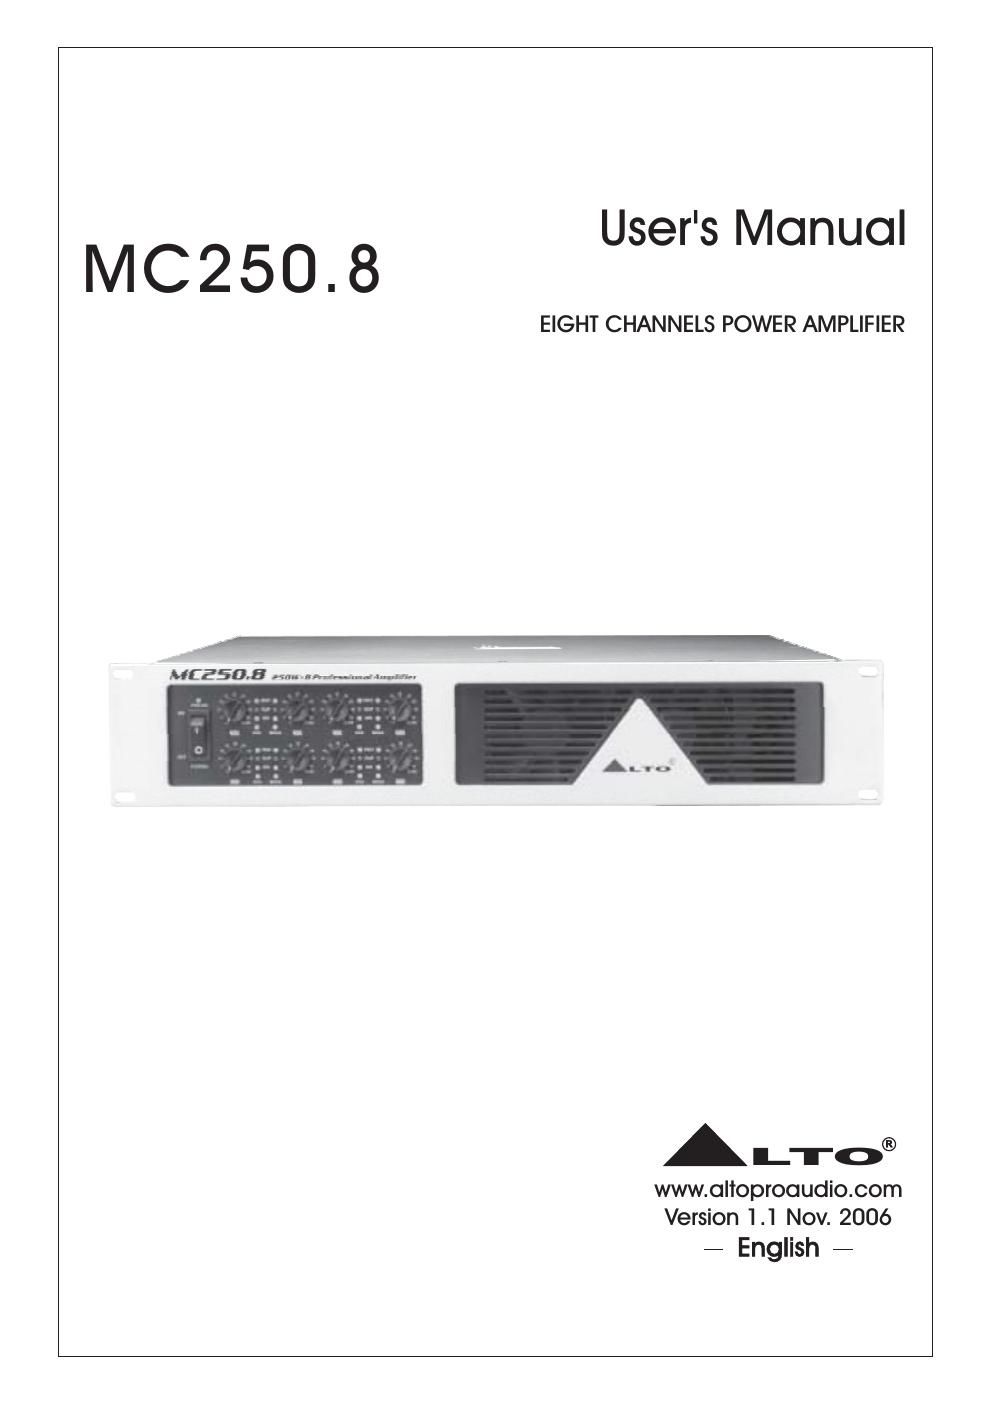 alto mc 250 8 users manual